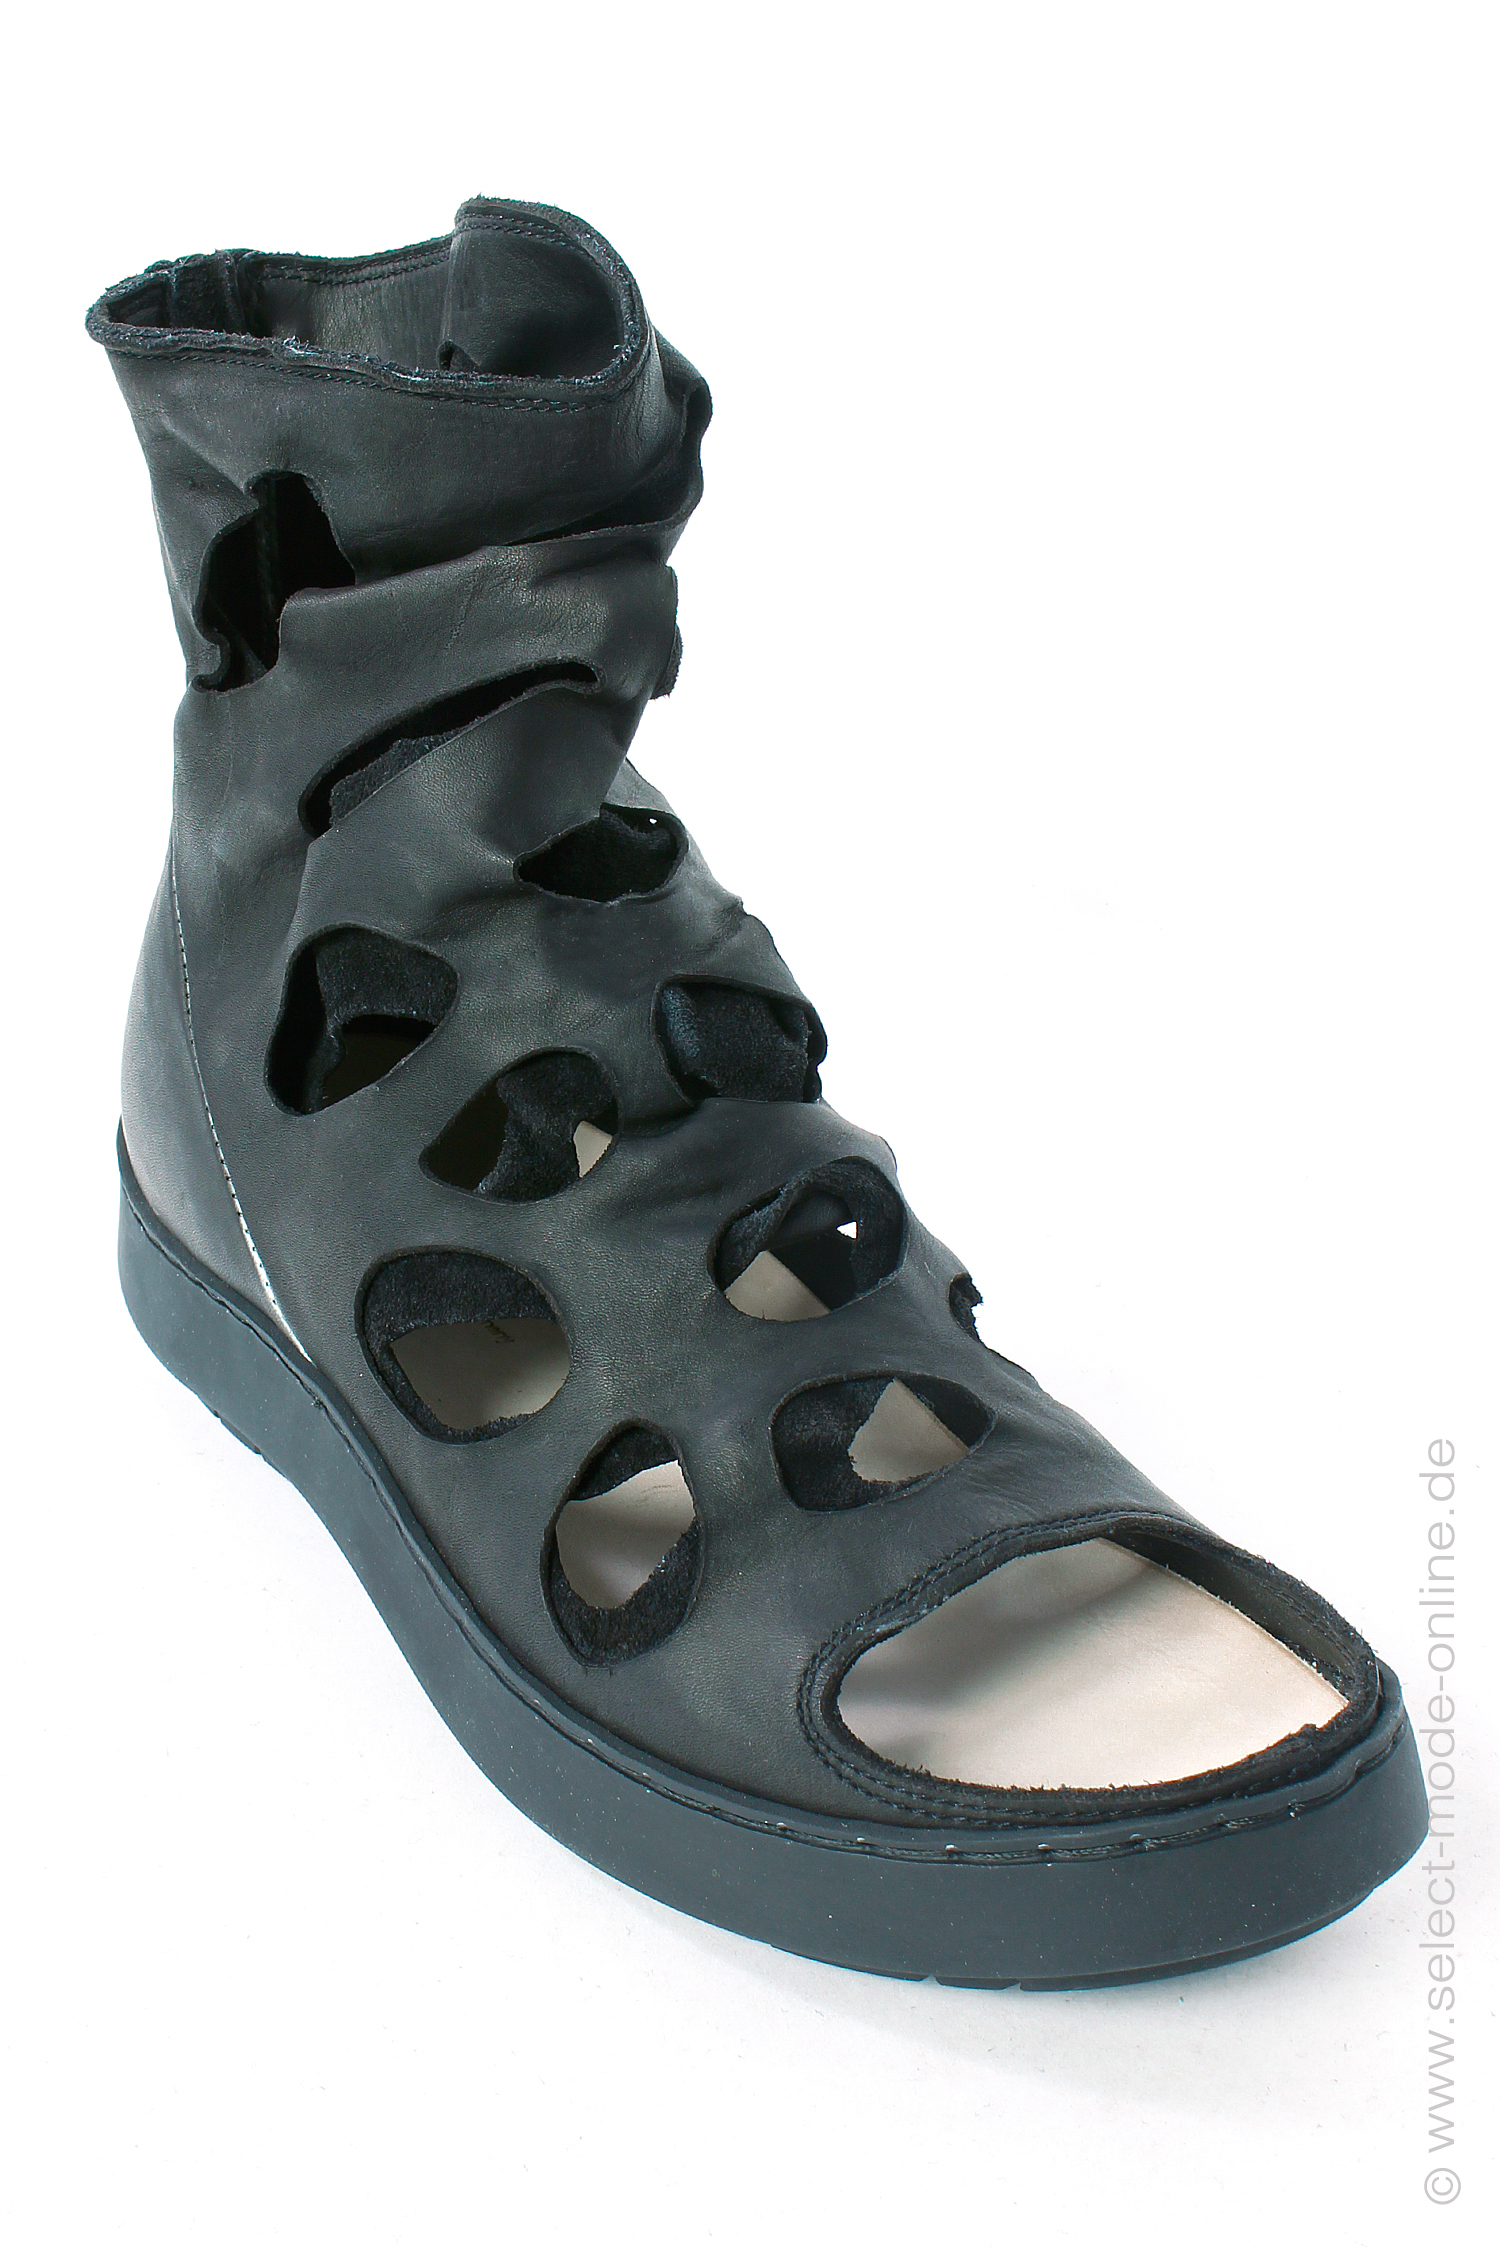 Leather sandals - Black - Task